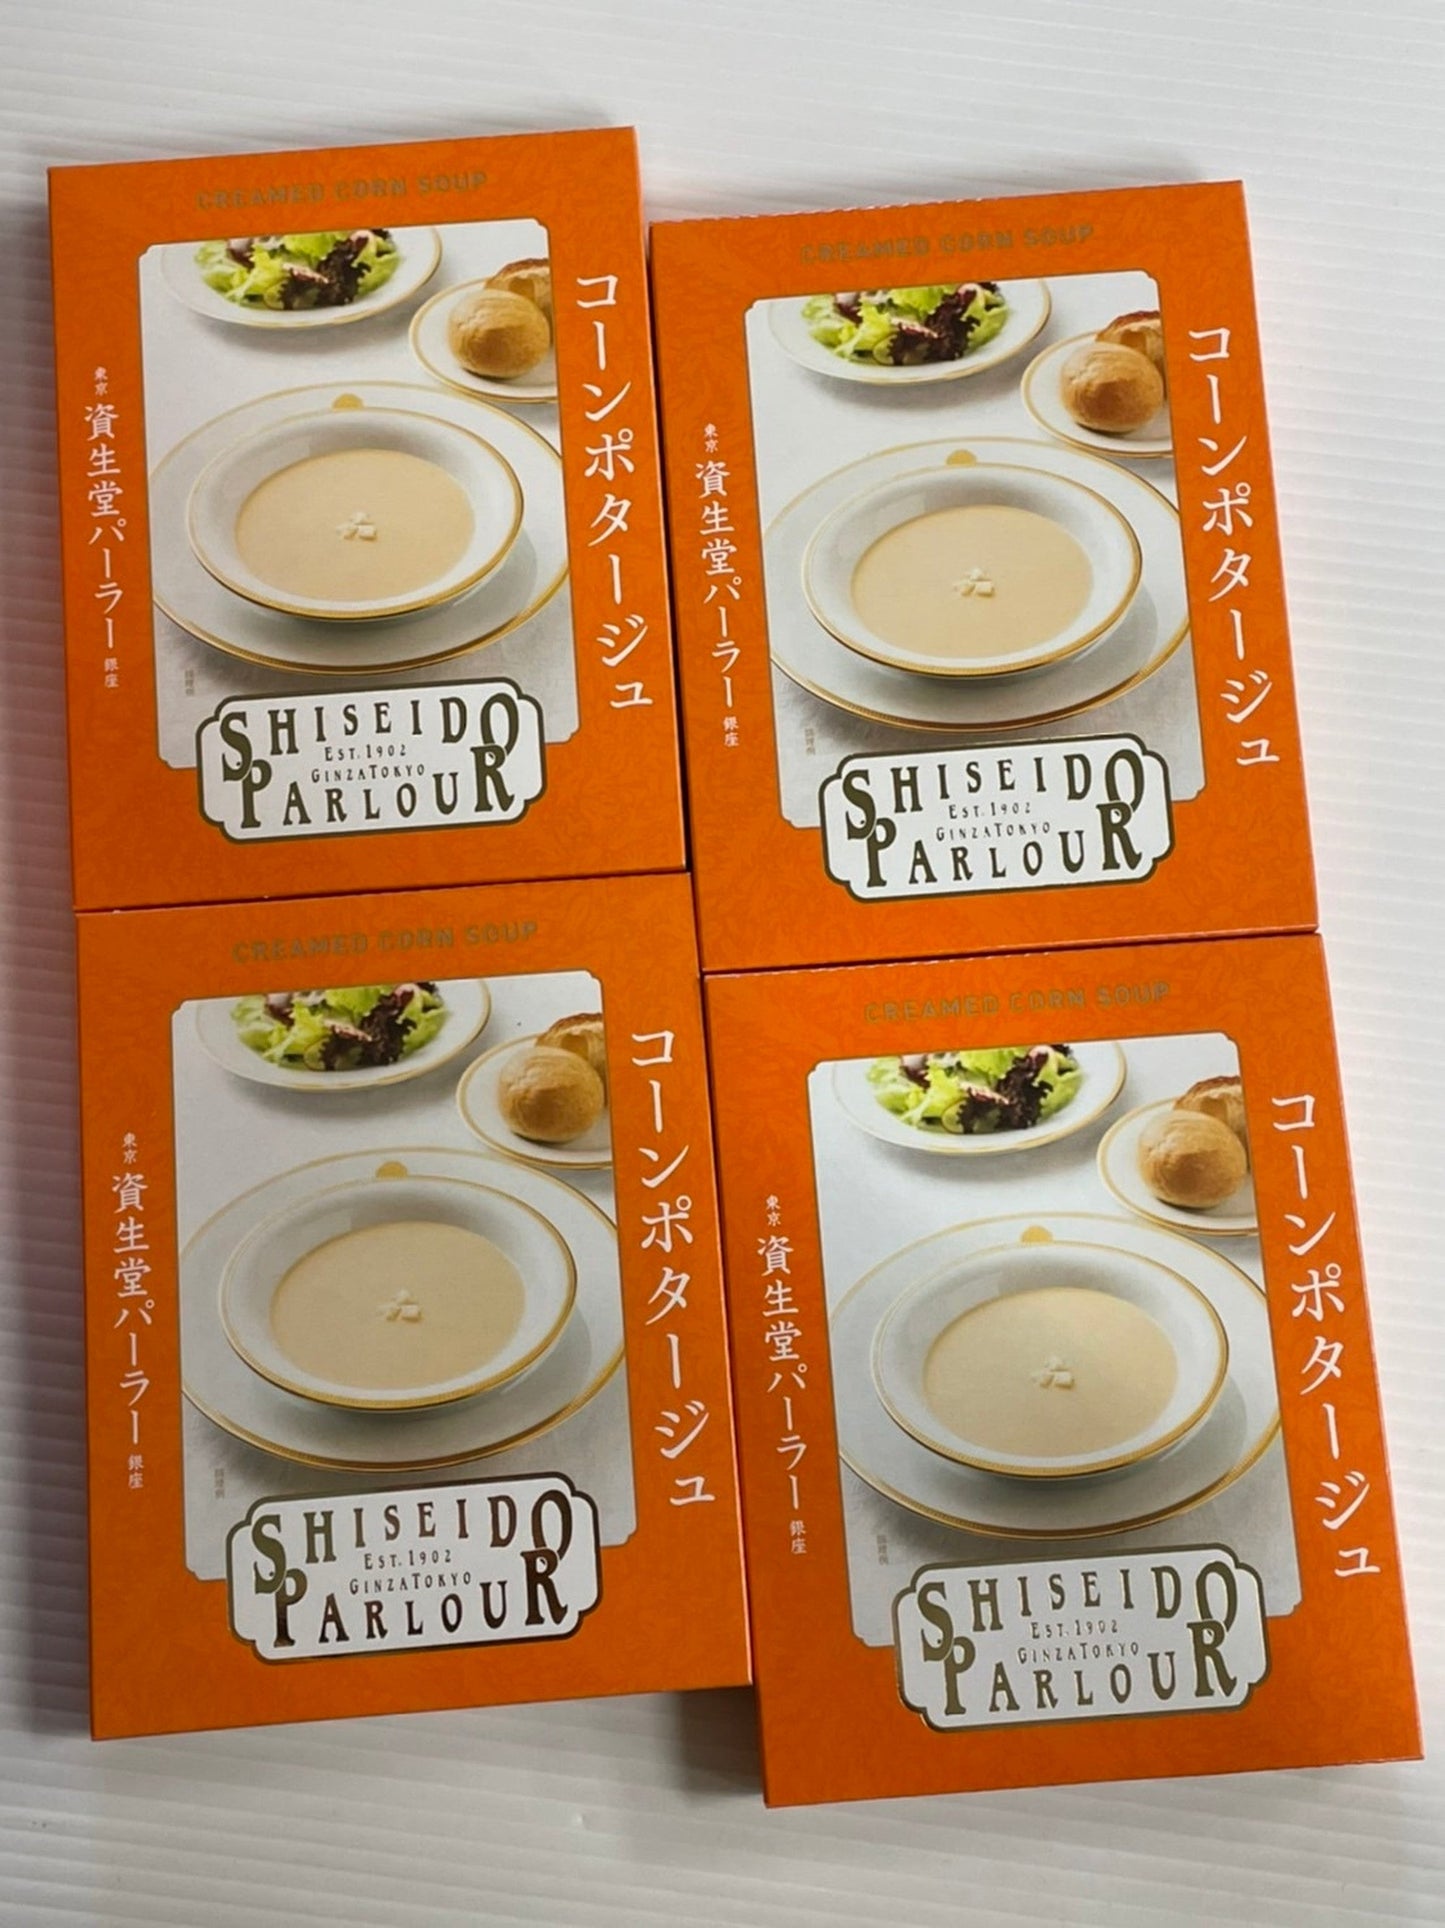 Shiseido Parlor Corn potage 4 servings